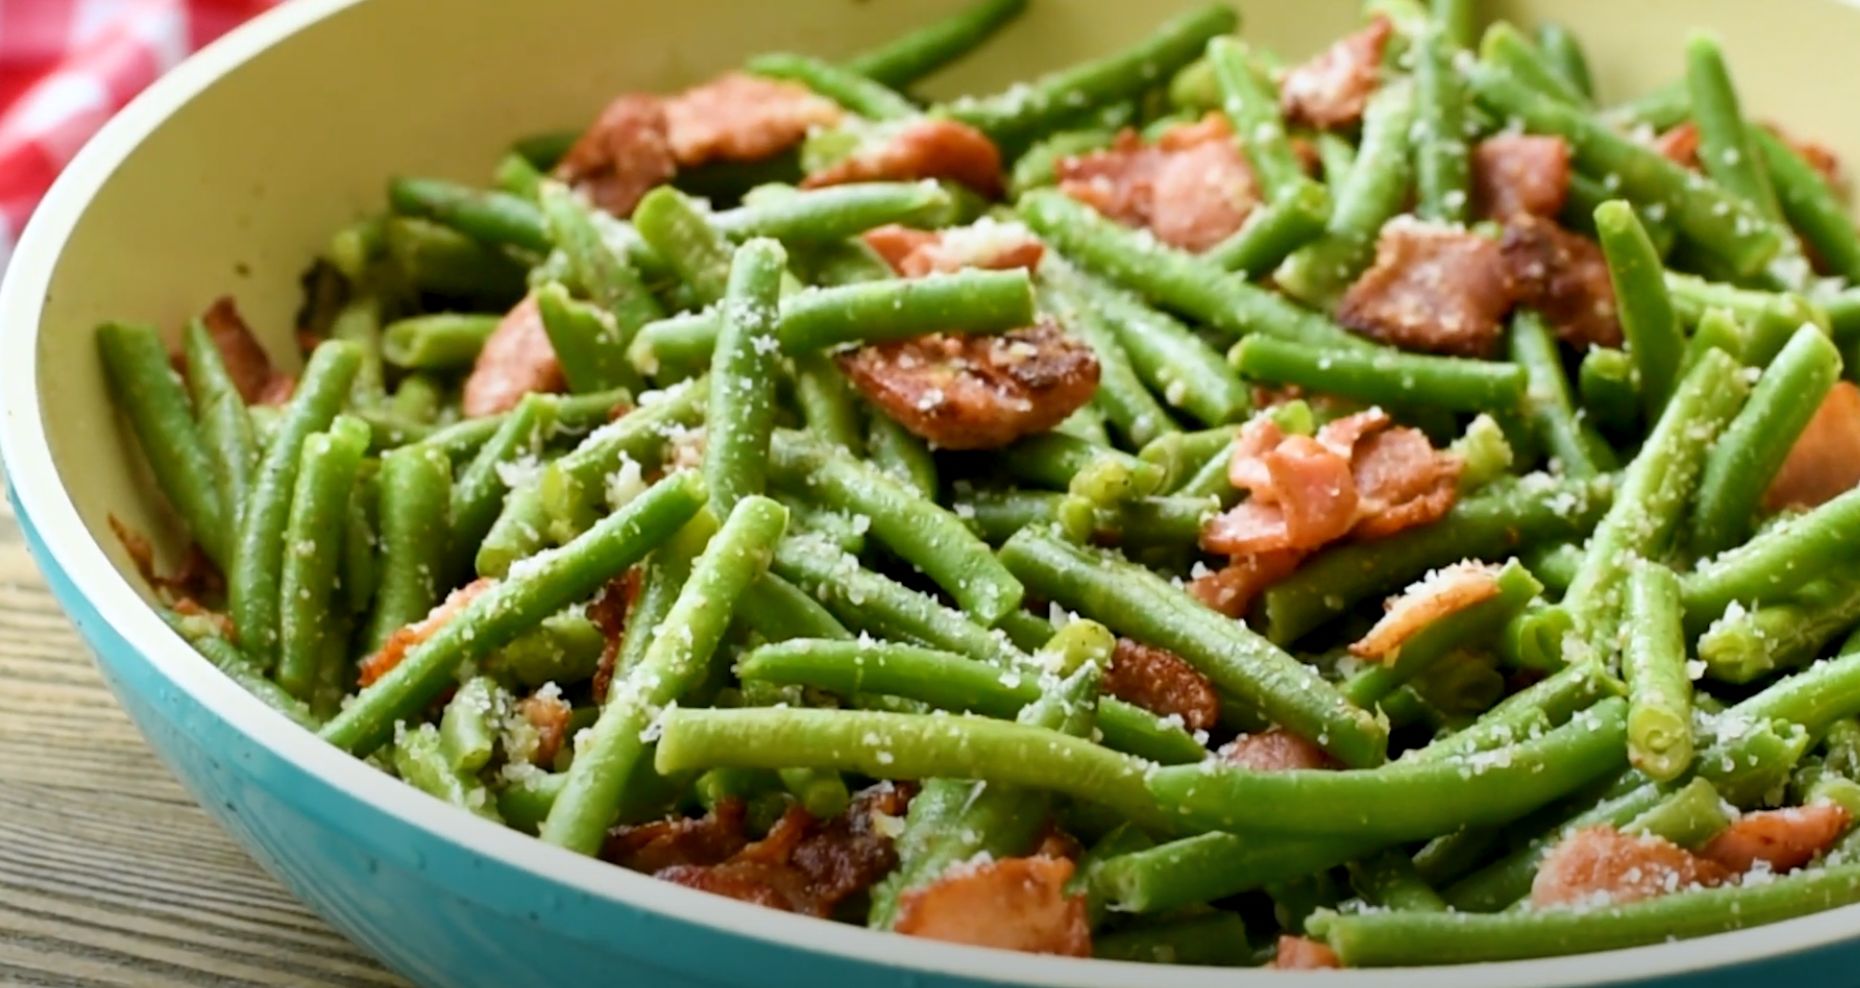 Garlic Parmesan Green Beans with Bacon Recipe | Recipes.net